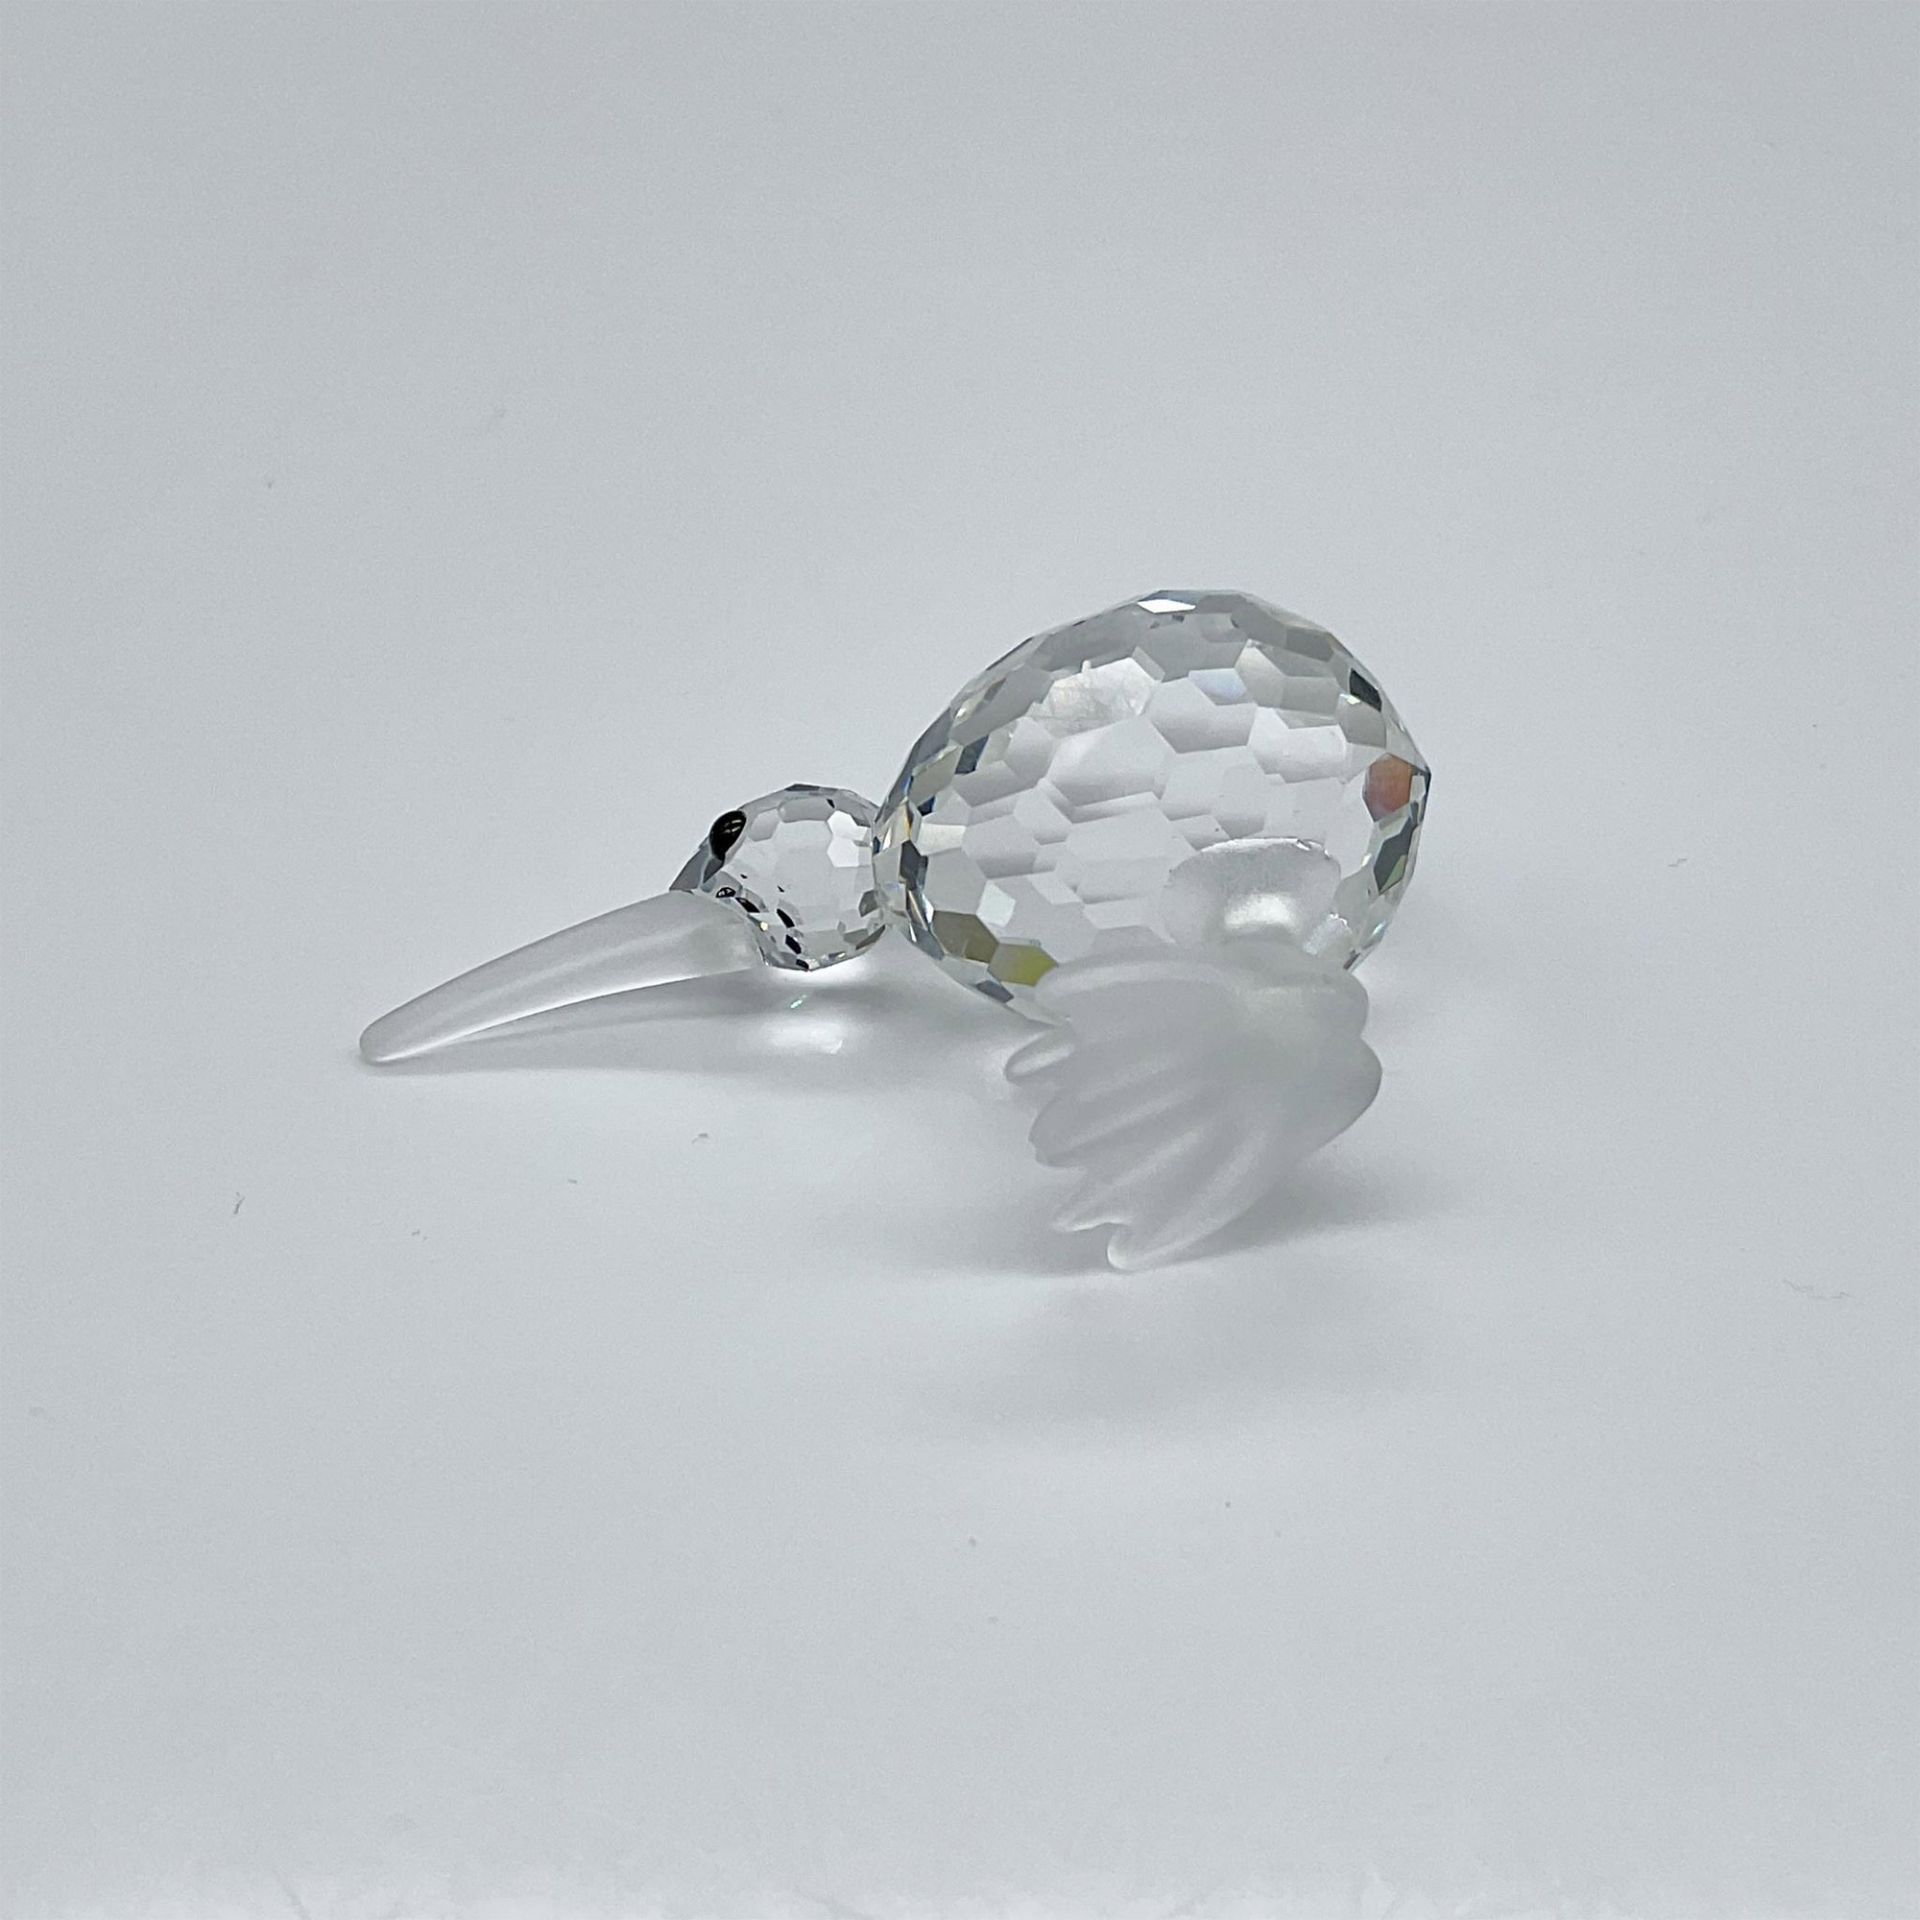 Swarovski Crystal Figurine, Kiwi Bird - Image 3 of 4